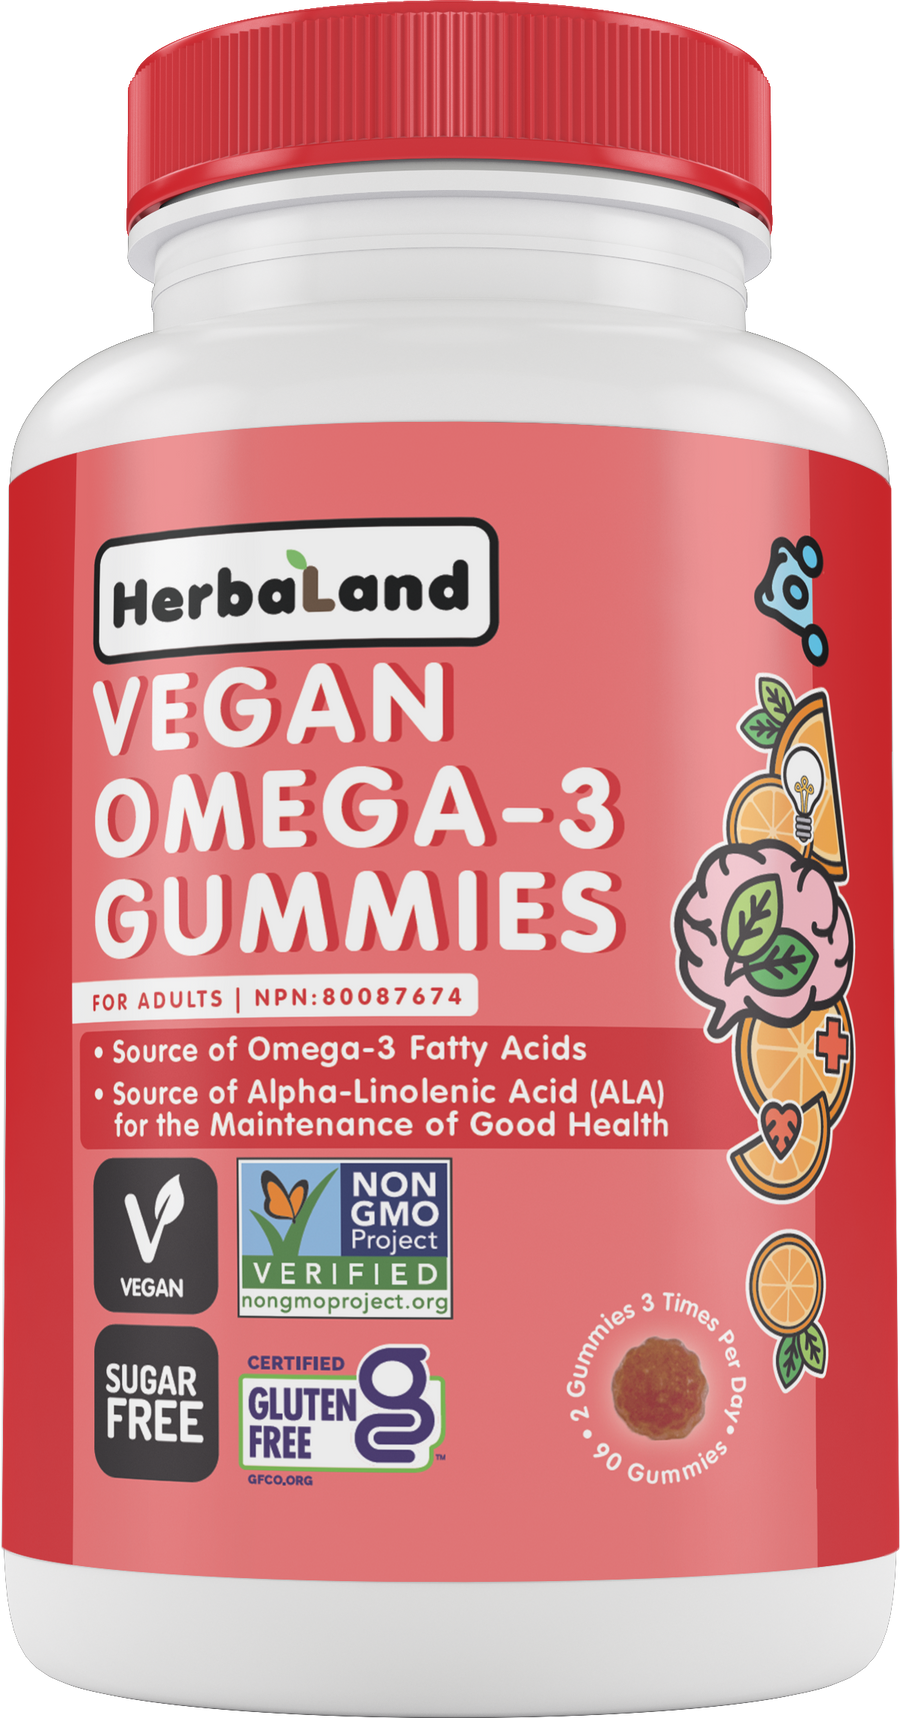 Herbaland Gummy For Adults: Vegan Omega3